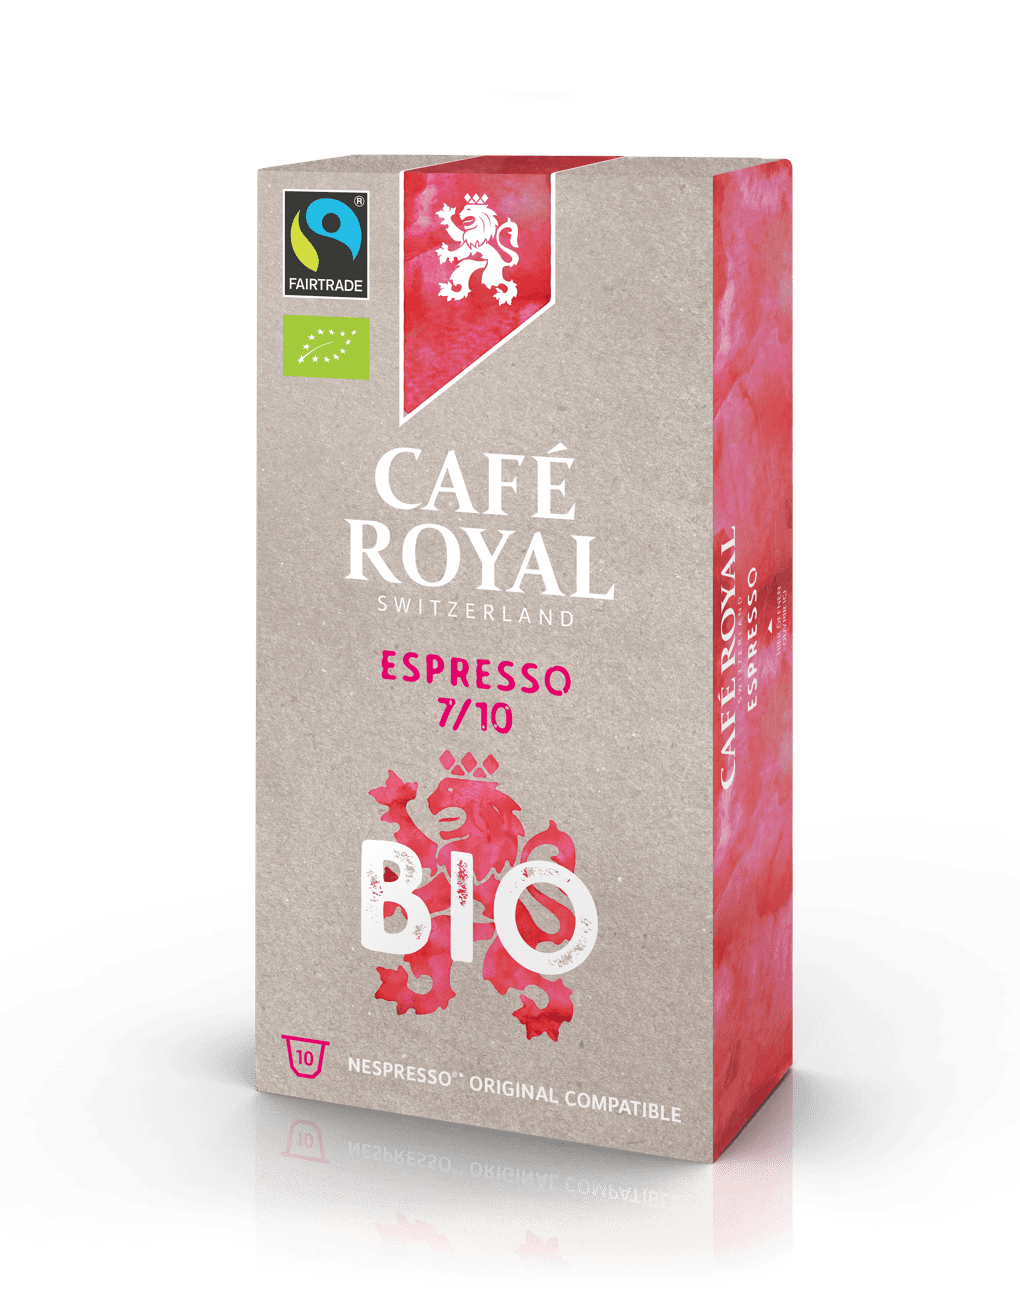 Bio Organic Espresso 10 Kaffeekapseln Nespresso kompatibel von Café Royal